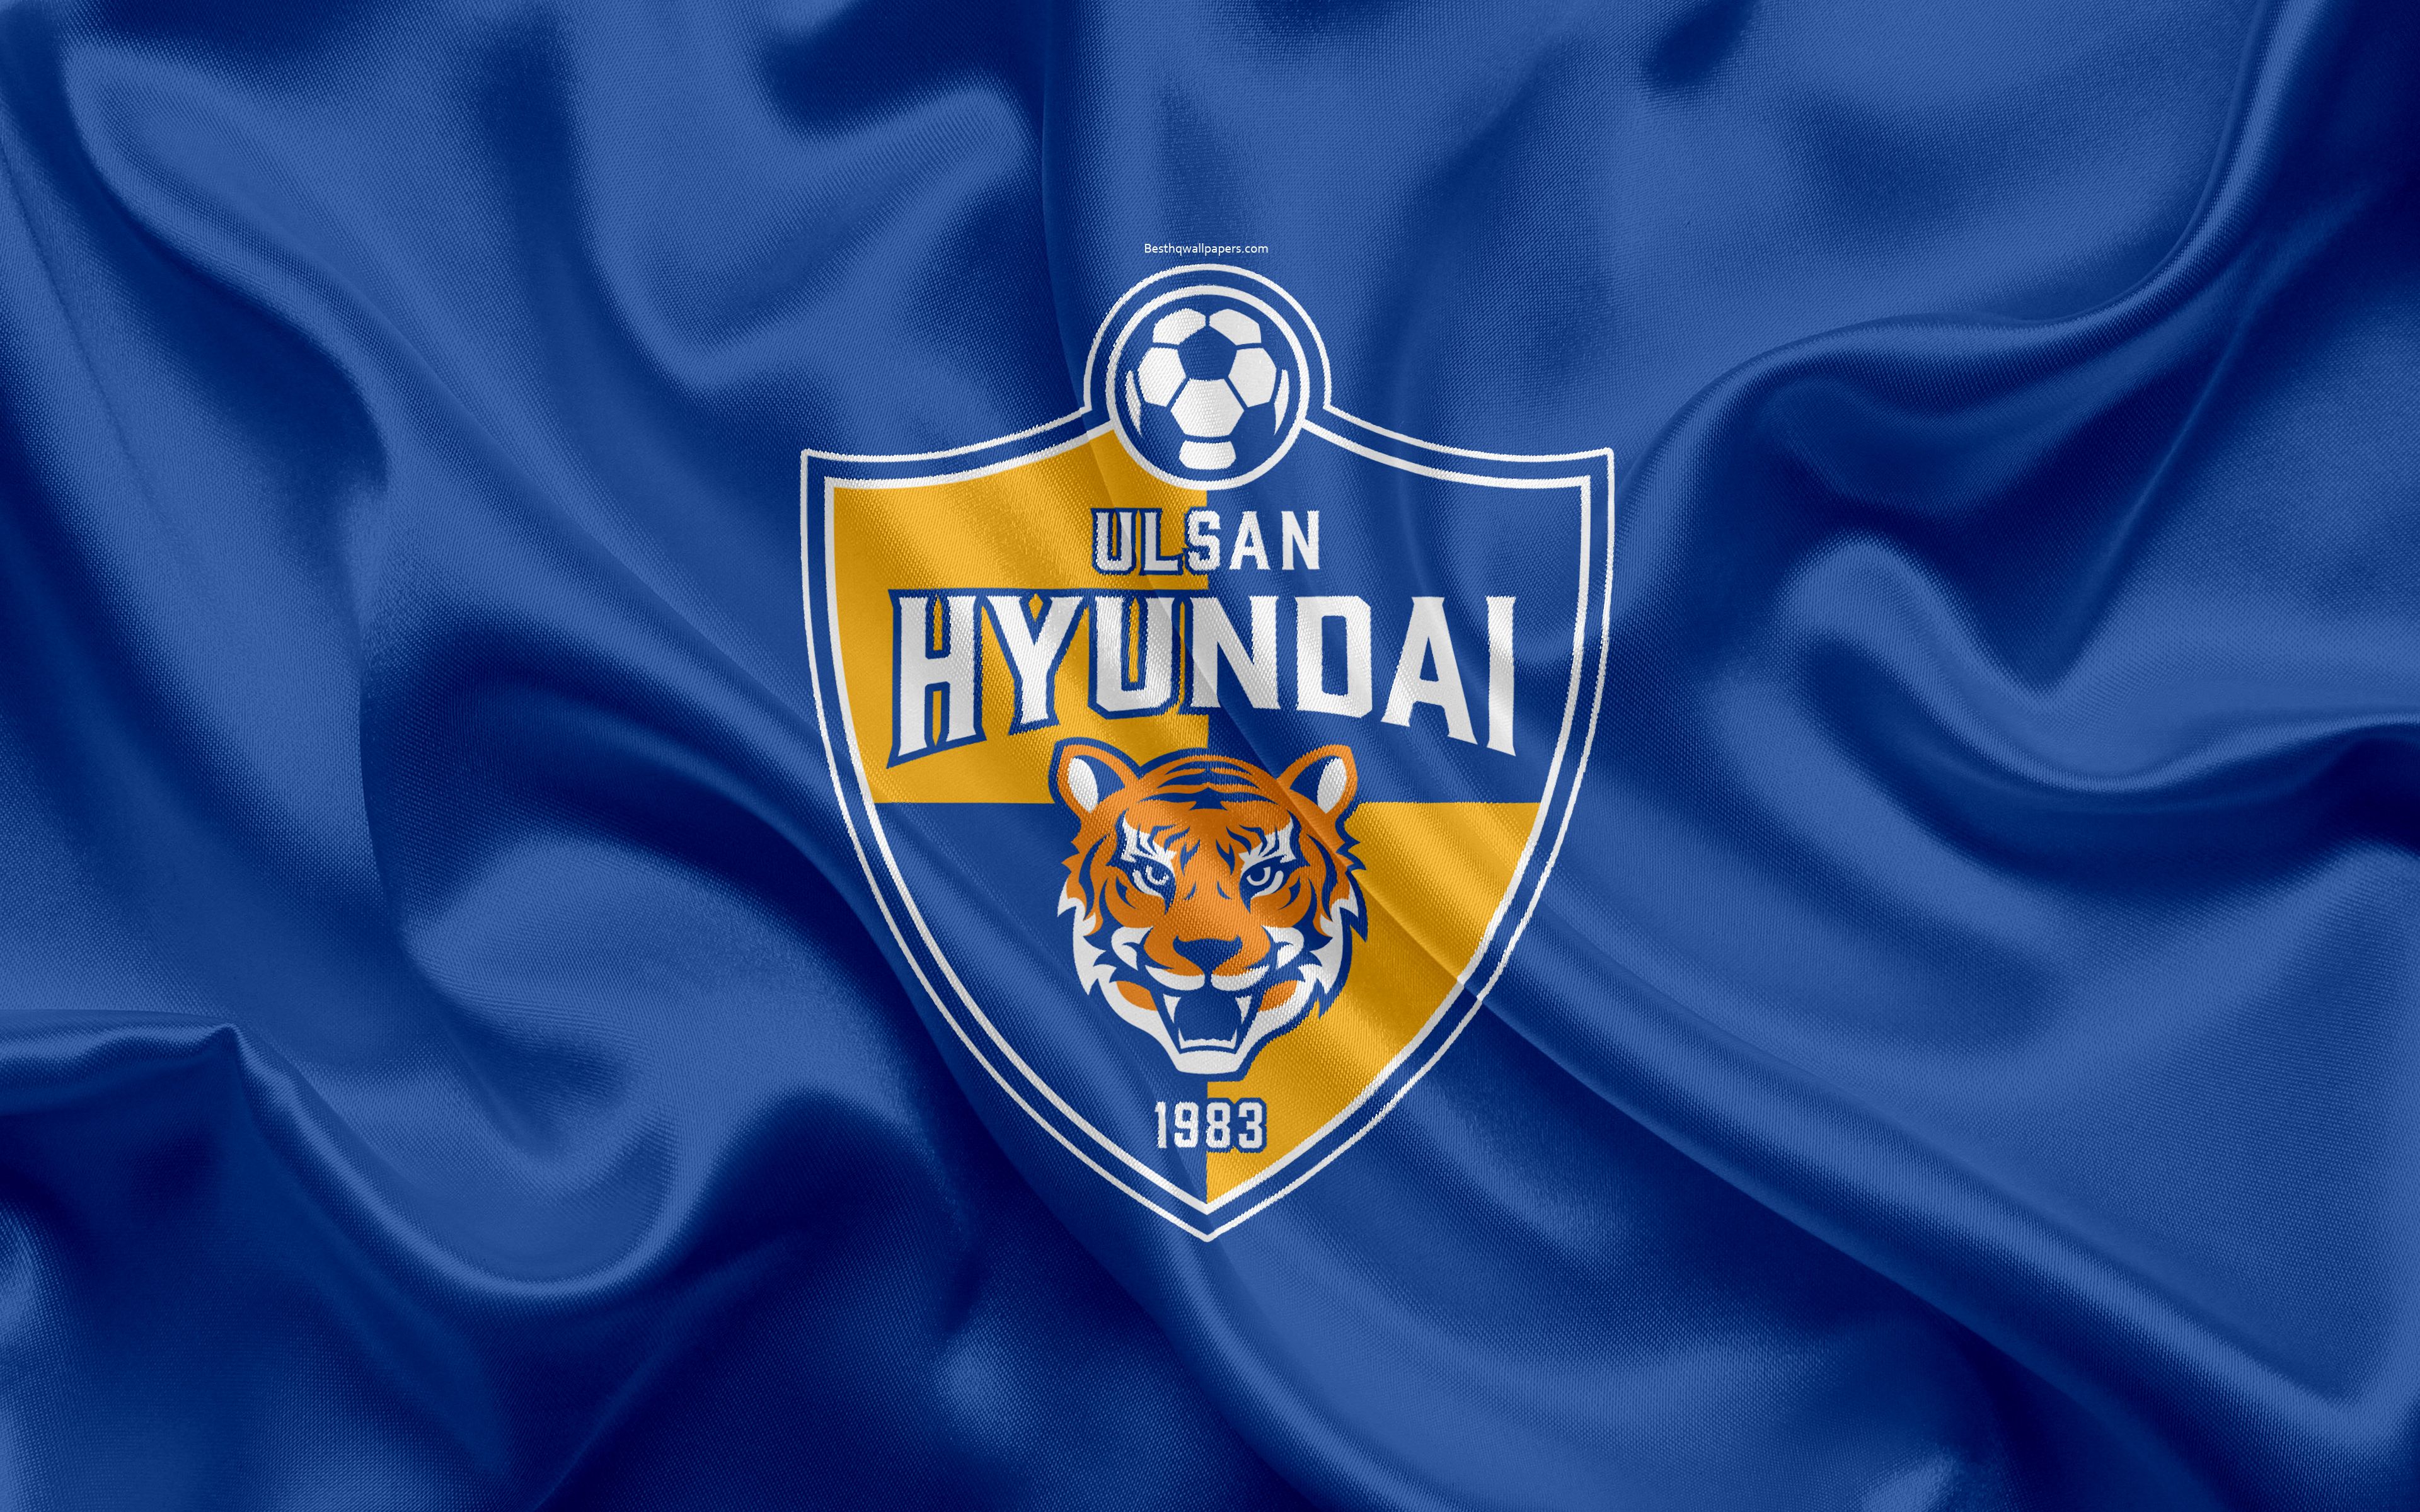 Download wallpaper Ulsan Hyundai FC, silk flag, 4k, logo, emblem